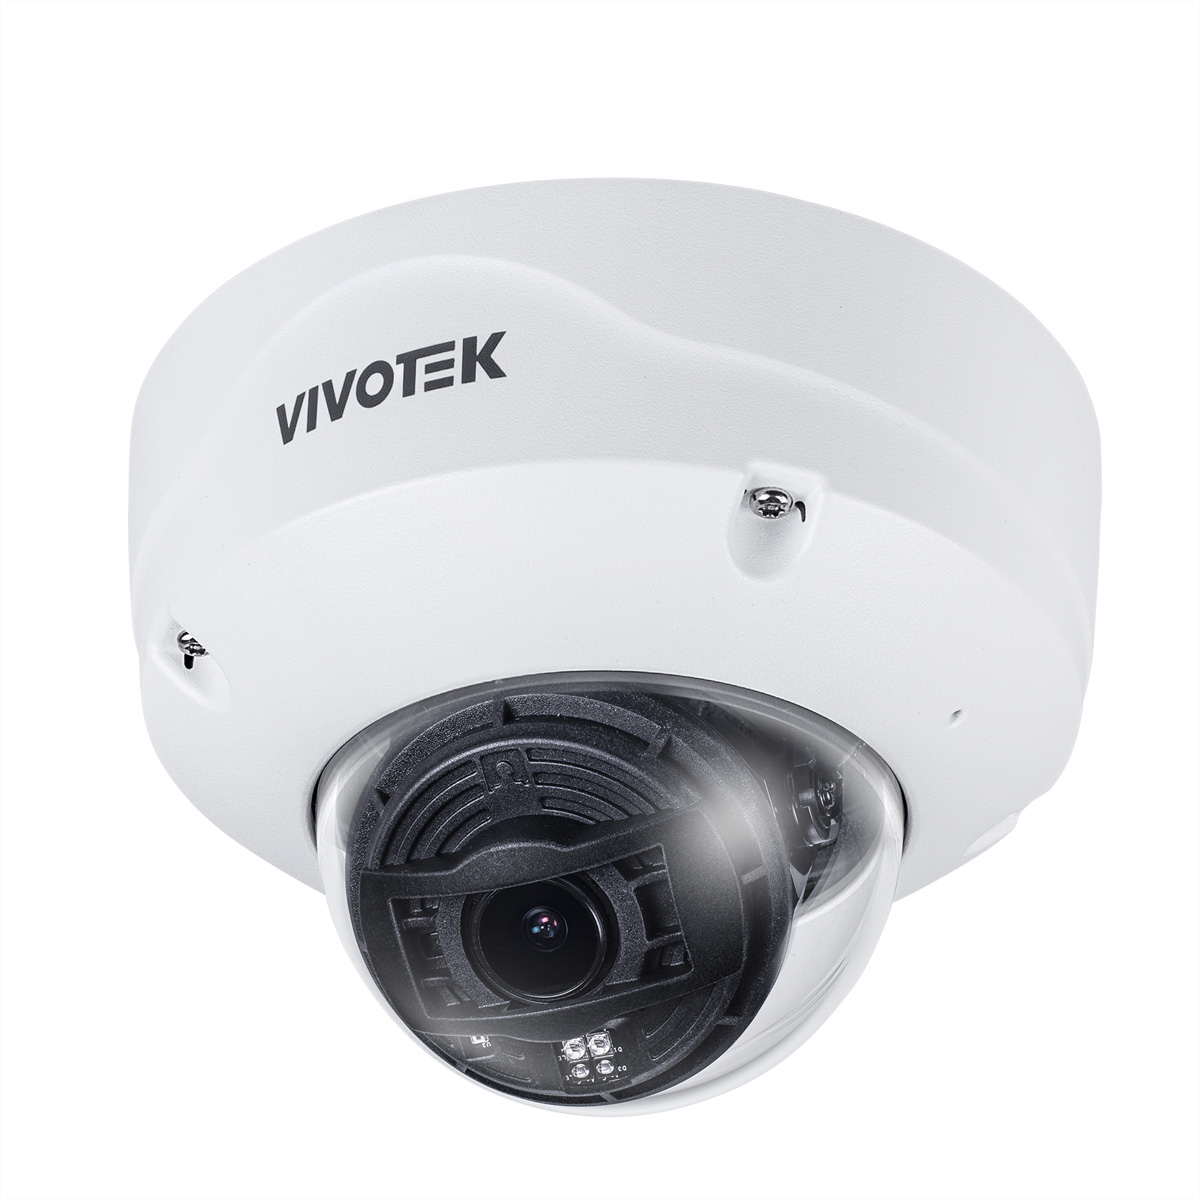 VIVOTEK FD9365-EHTV-v2, Outdoor Vandal-proof Dome 2MP